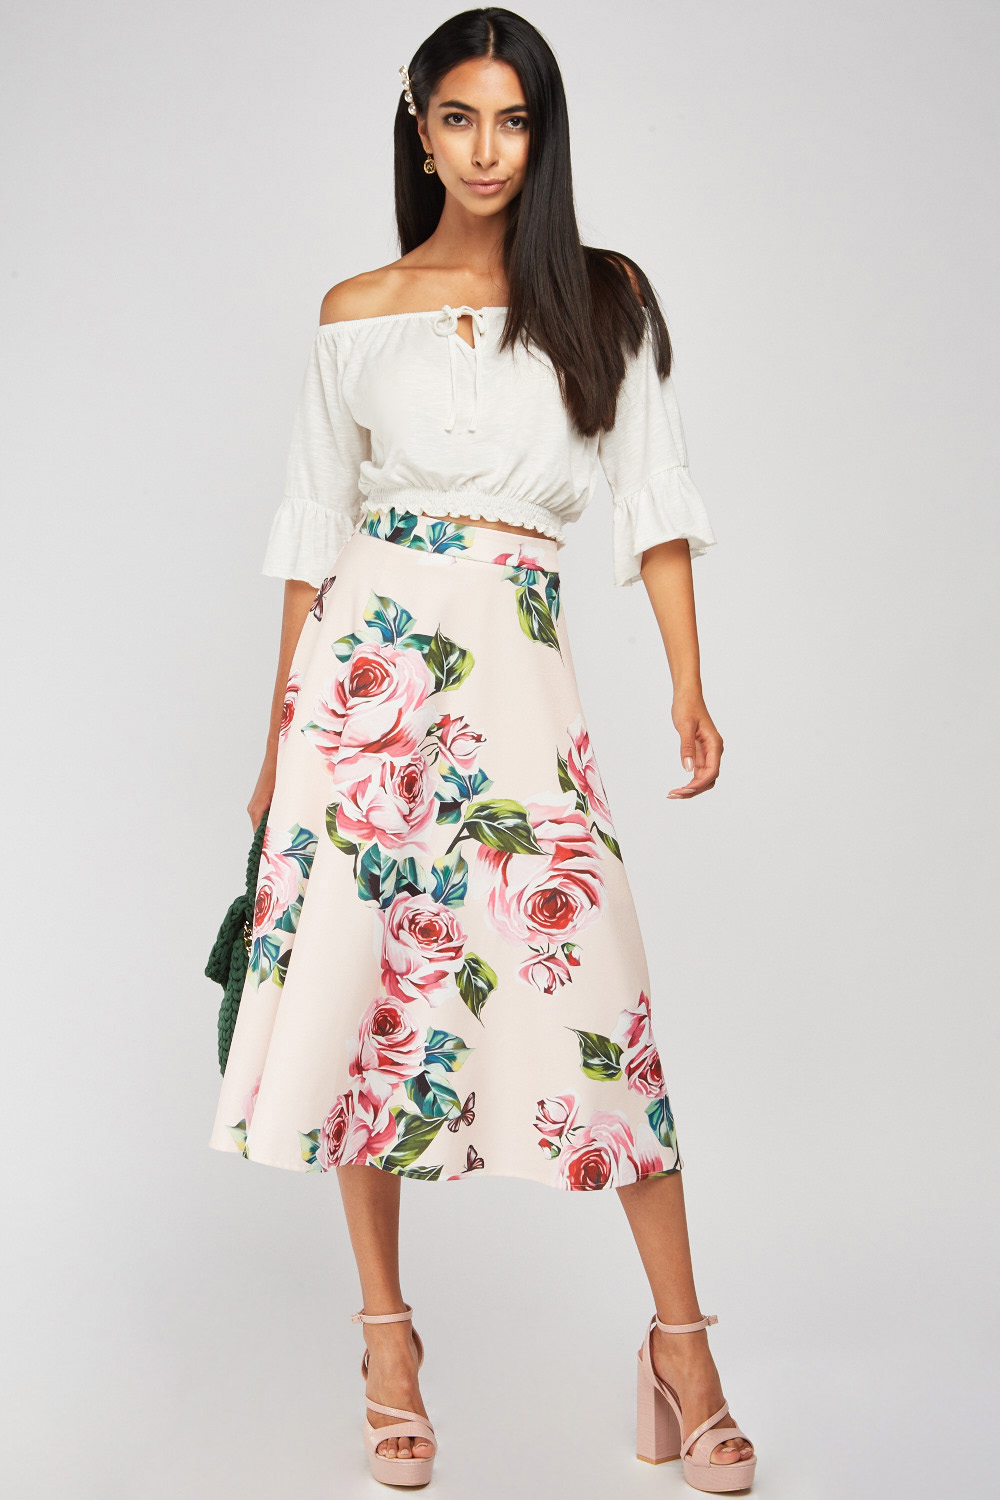 Large Rose Print Pleated Skirt - Just $7